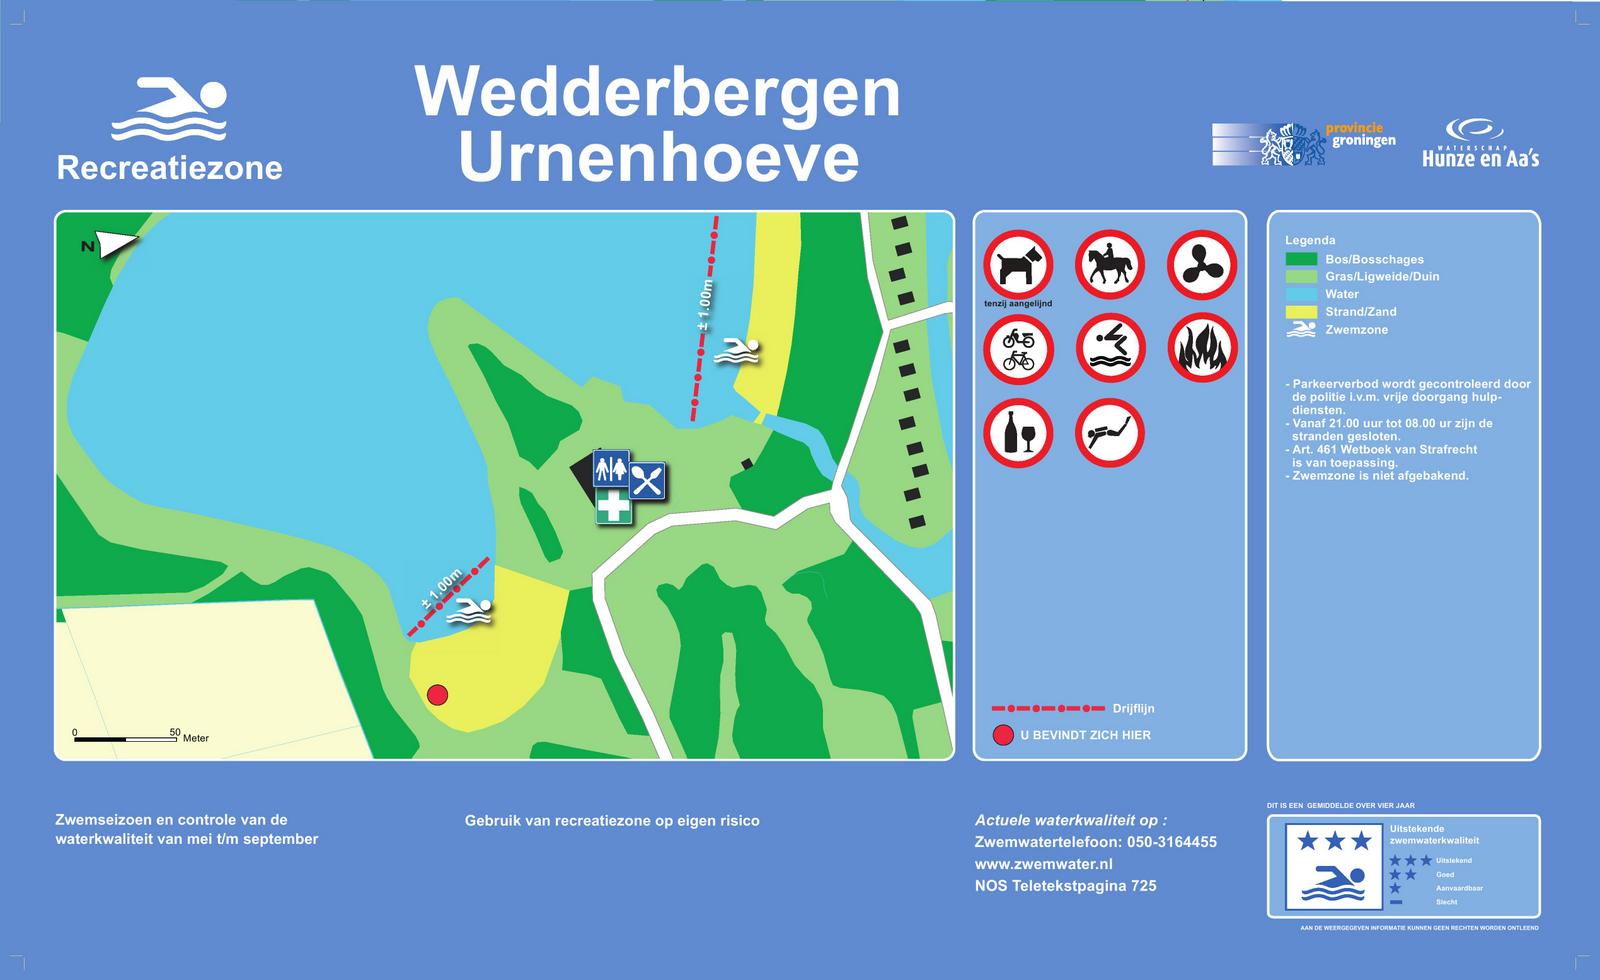 The information board at the swimming location Wedderbergen Urnenhoeve, Wedde